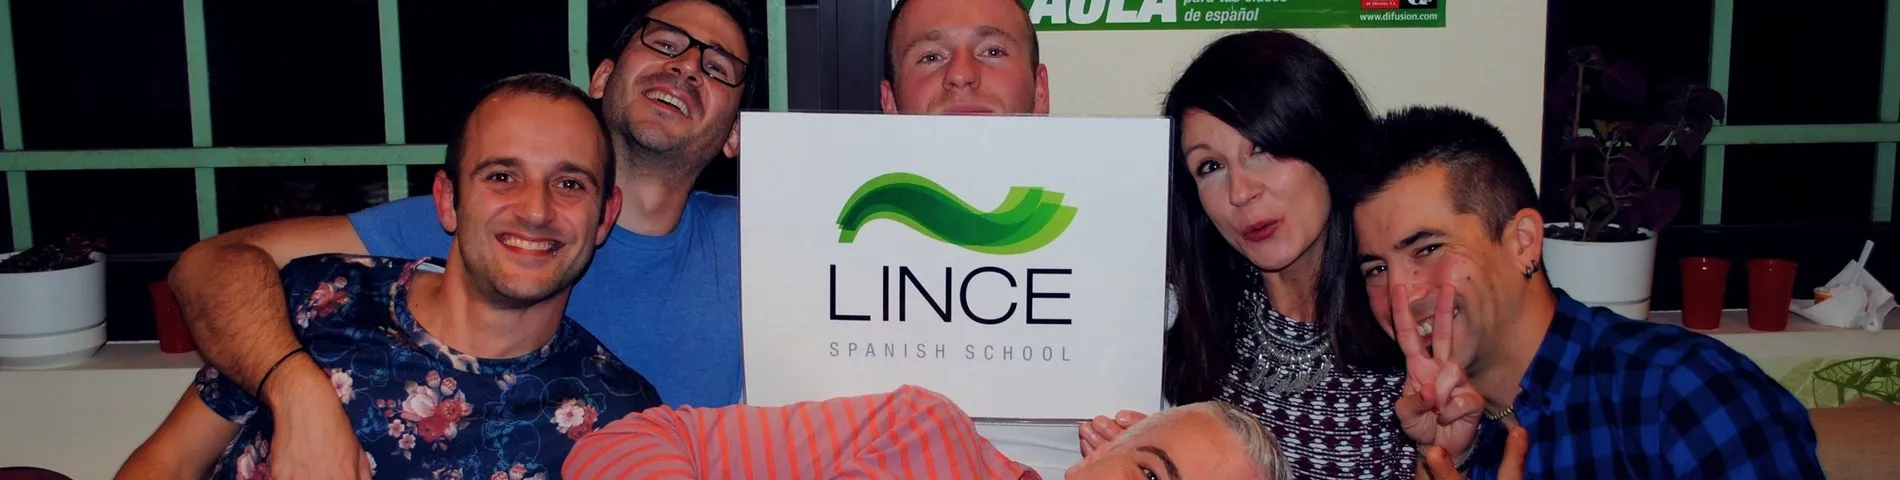 Lince Spanish School obrazek 1